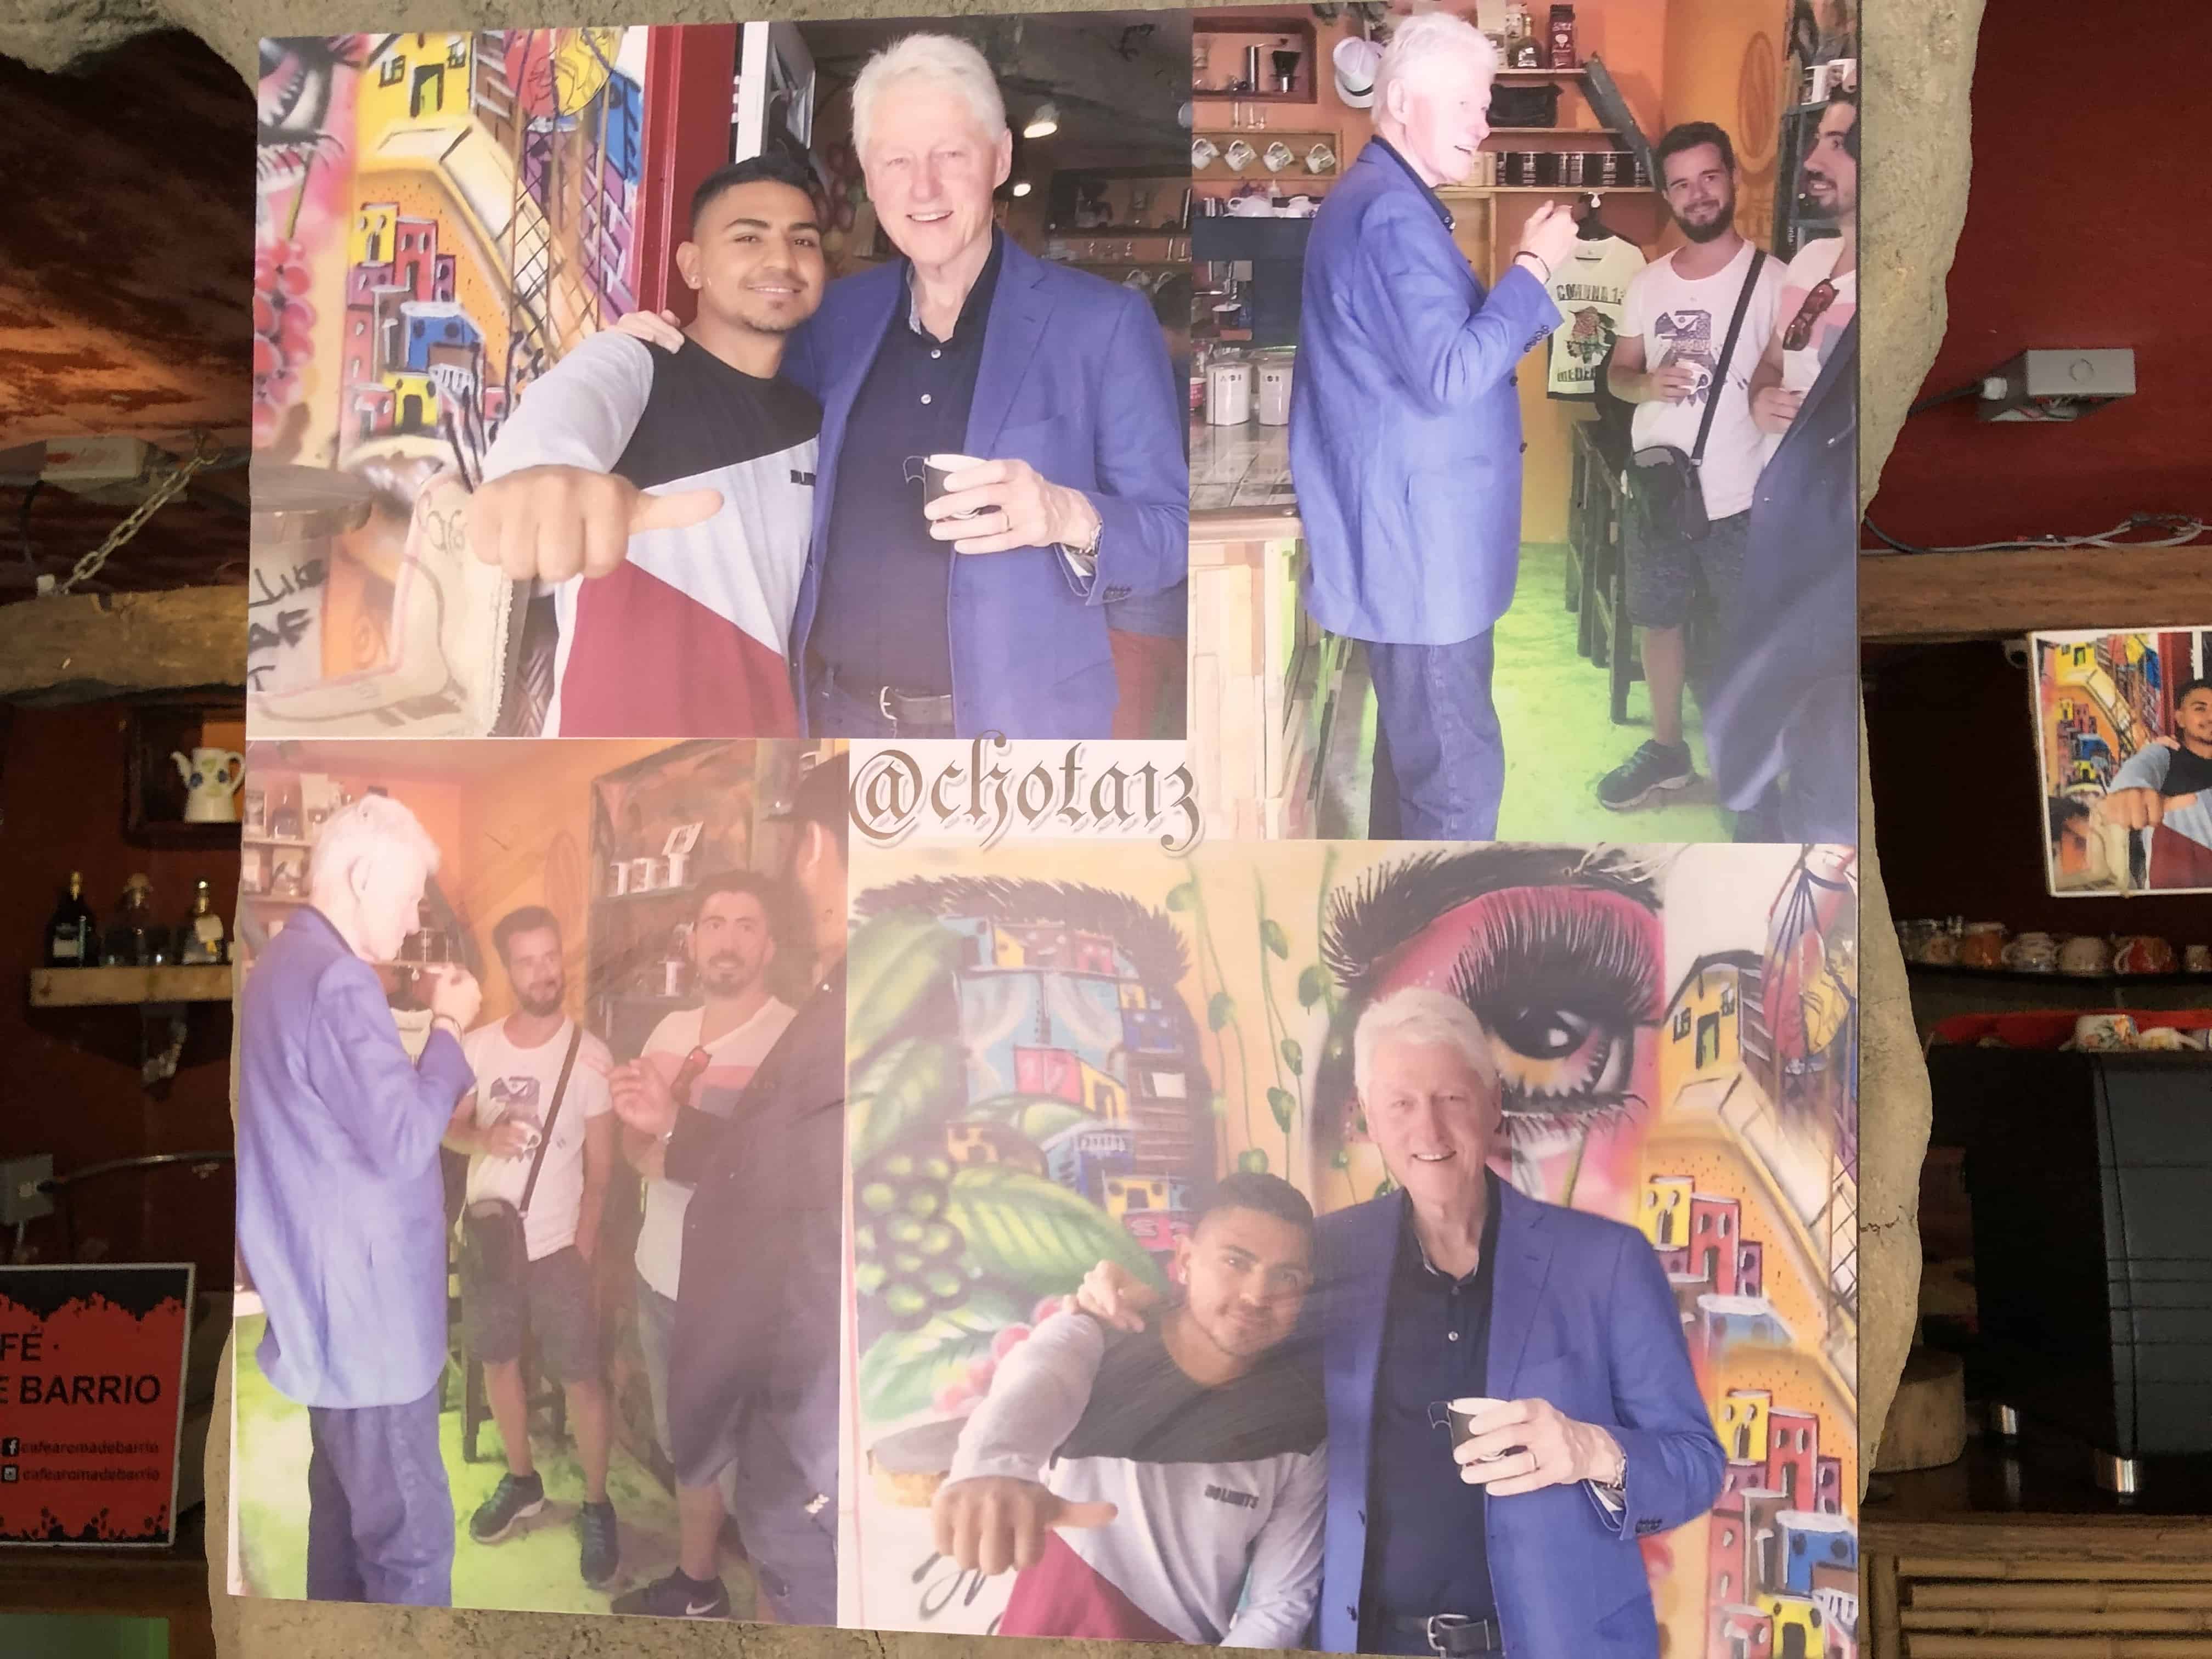 Chota with Bill Clinton at Chota's café in Comuna 13, Medellín, Antioquia, Colombia